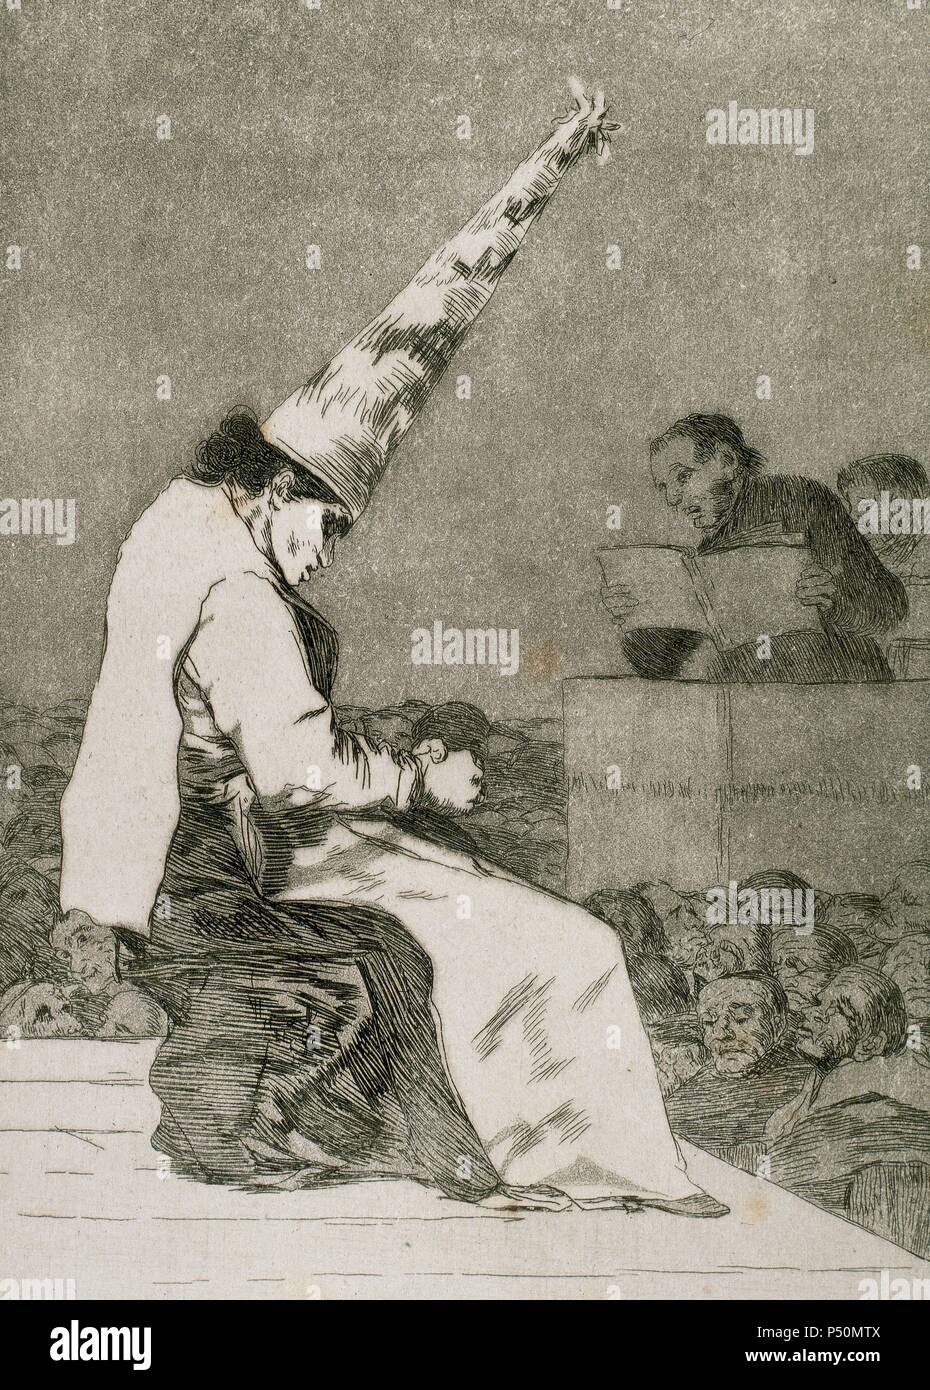 Francisco de Goya (1746-1828). Spanish painter and printmaker. Los Caprichos. Aquellos Polvos. Aquatint  n¼ 23 published in 1799. Stock Photo